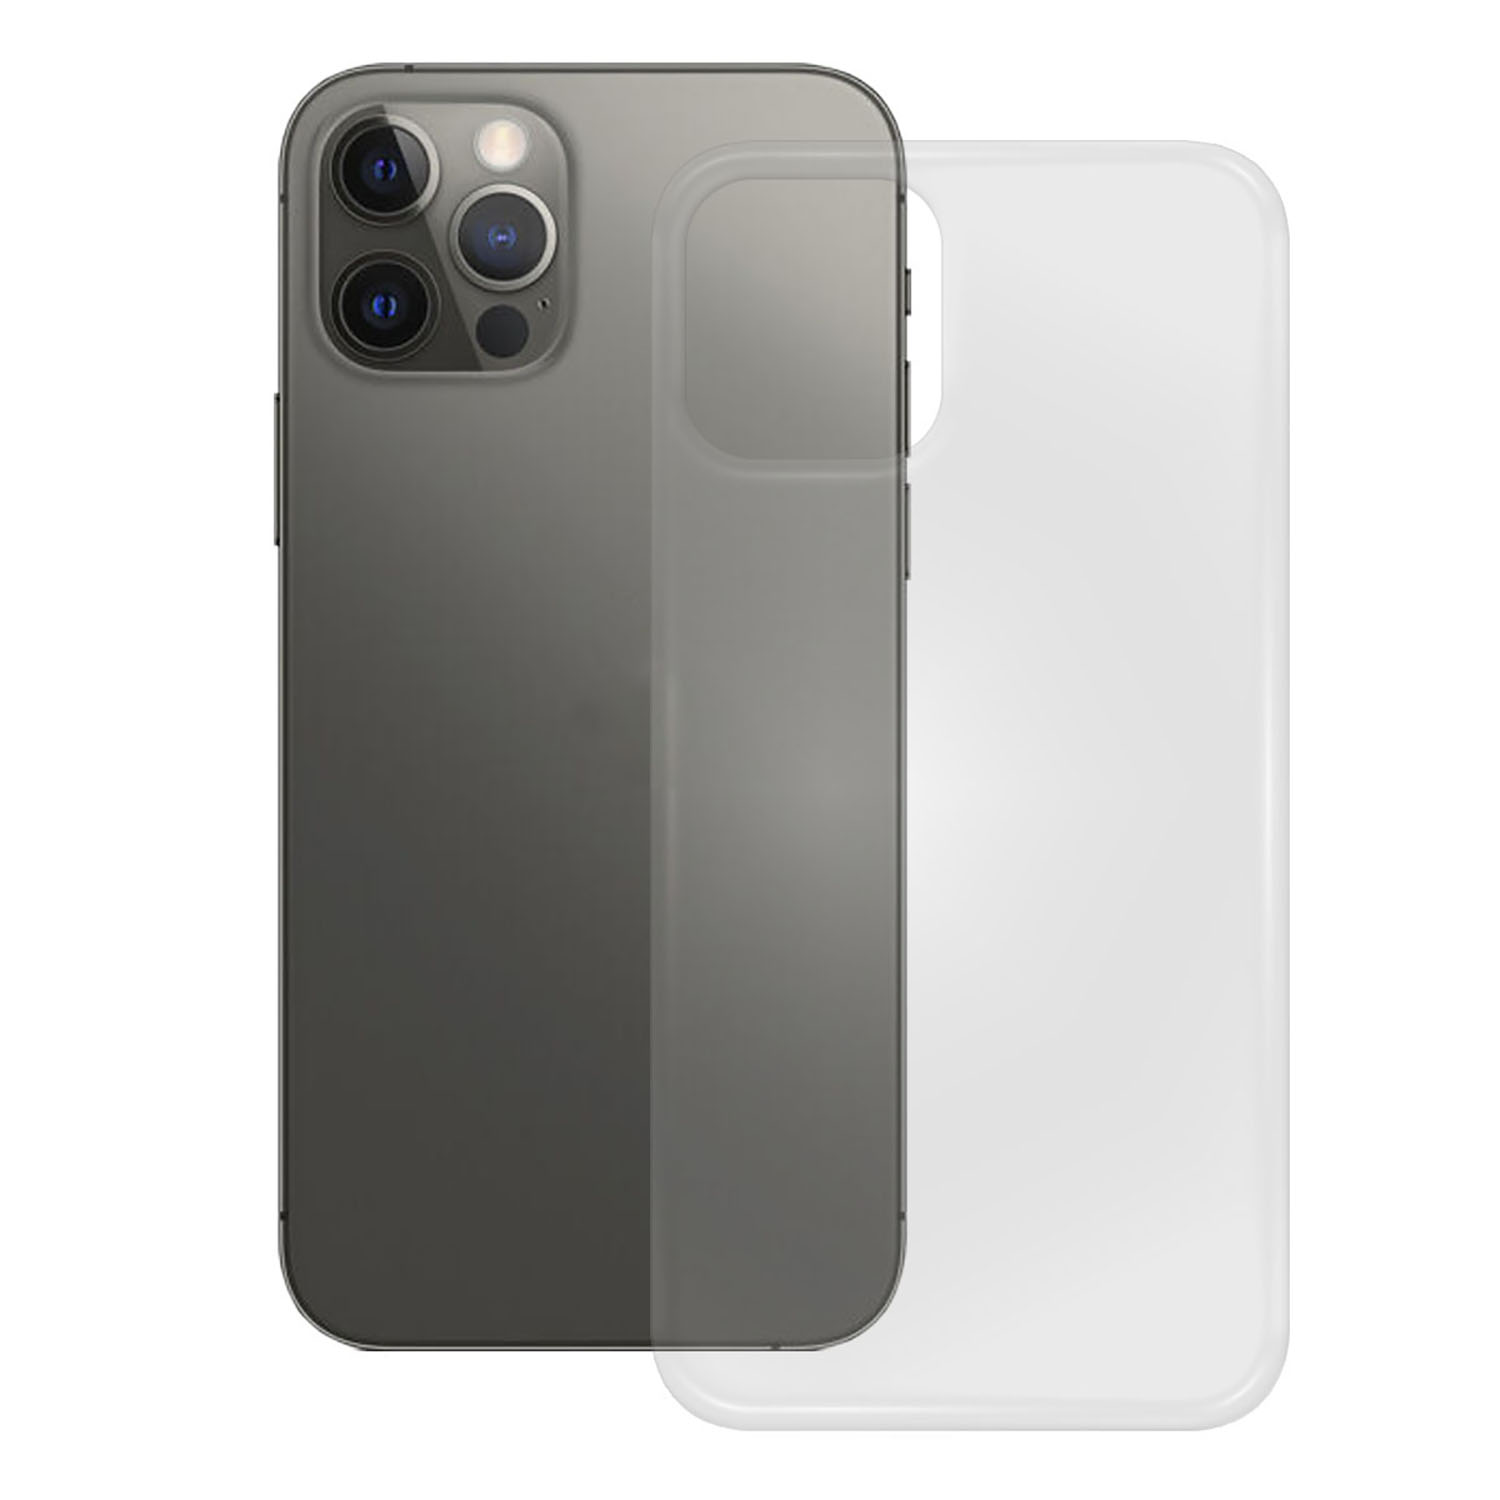 Pro Apple, Backcover, Case, Max, iPhone transparent, TPU 12 PEDEA Transparent